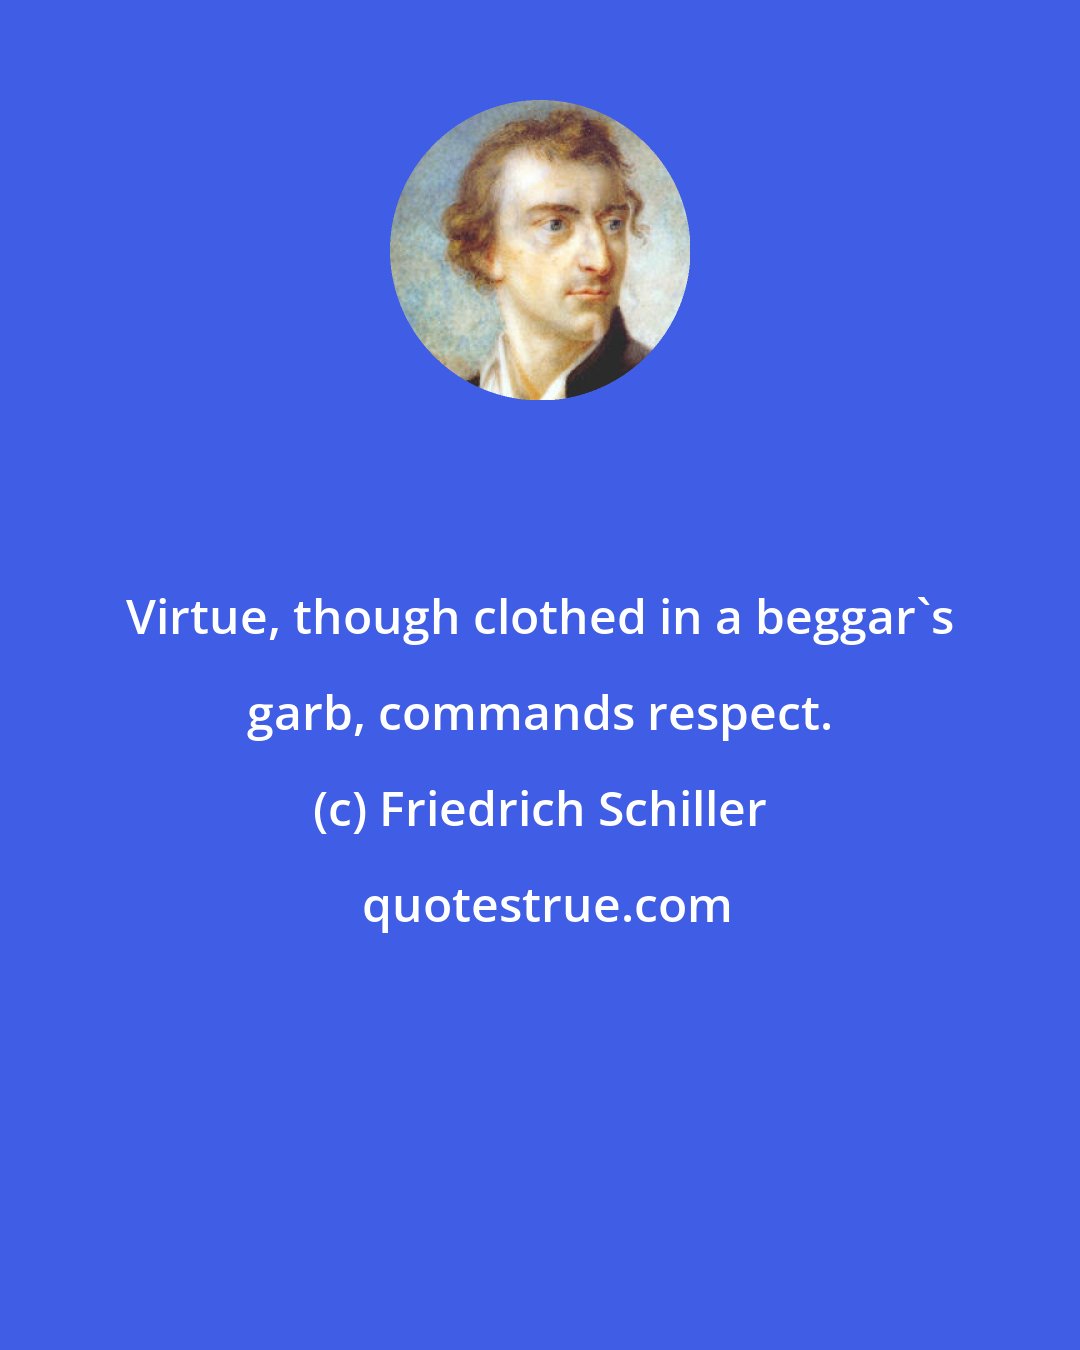 Friedrich Schiller: Virtue, though clothed in a beggar's garb, commands respect.